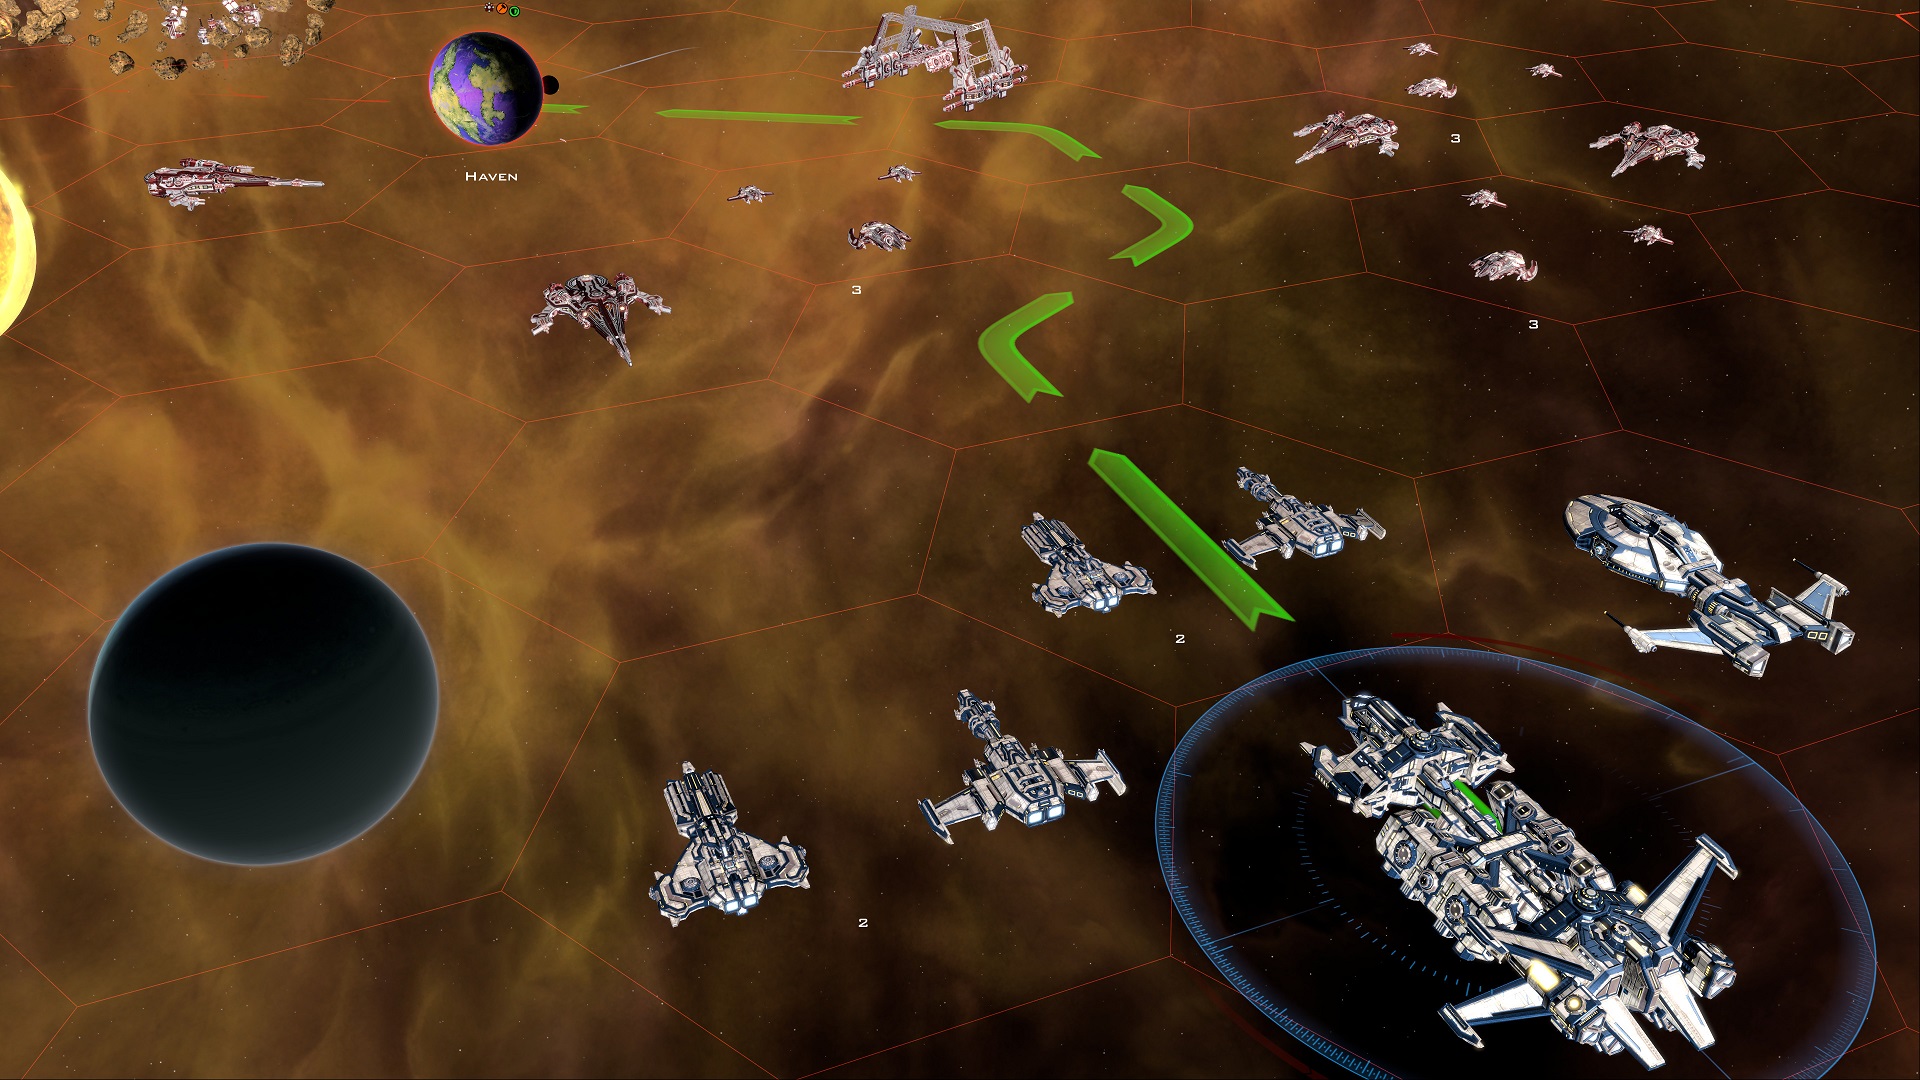 Galactic Civilizations III - Worlds in Crisis DLC